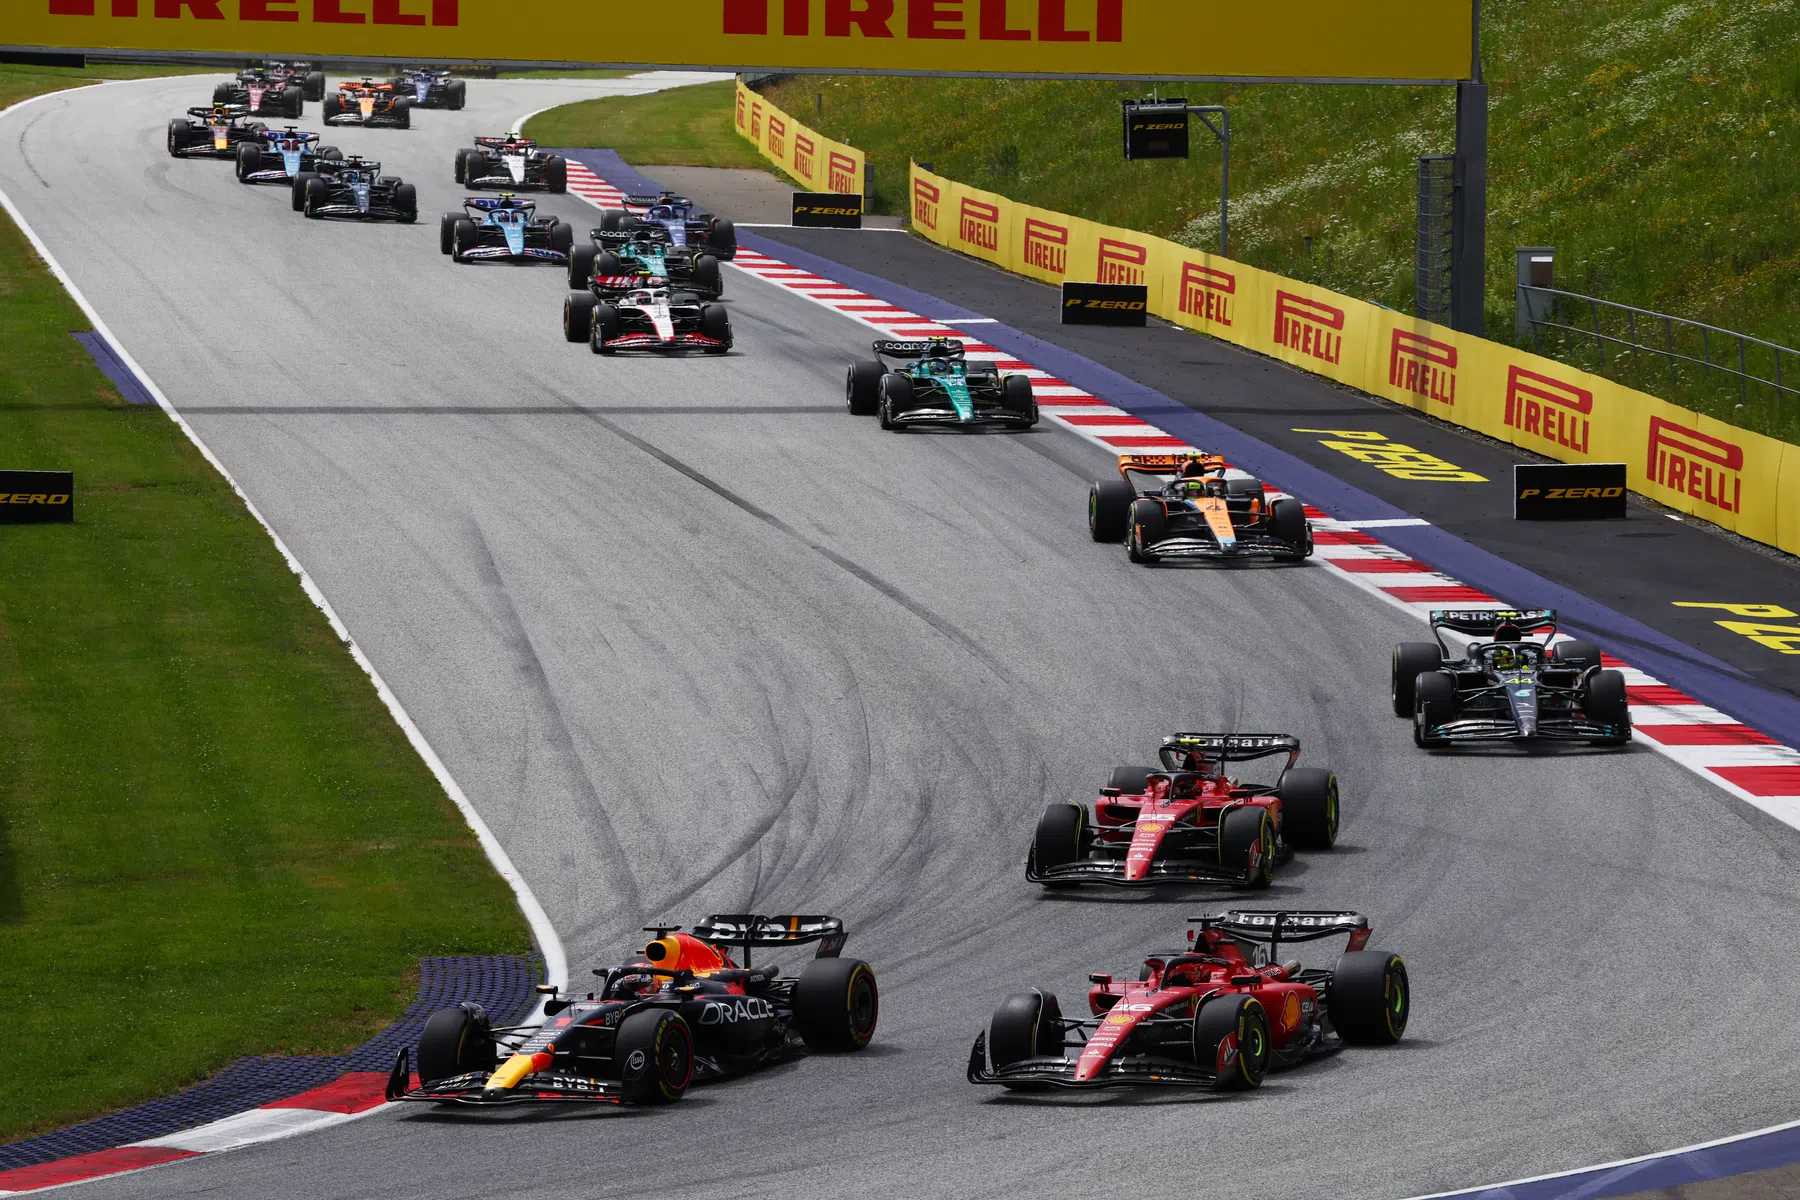 F1 AO VIVO | Corrida Sprint do Grande Prêmio da Áustria